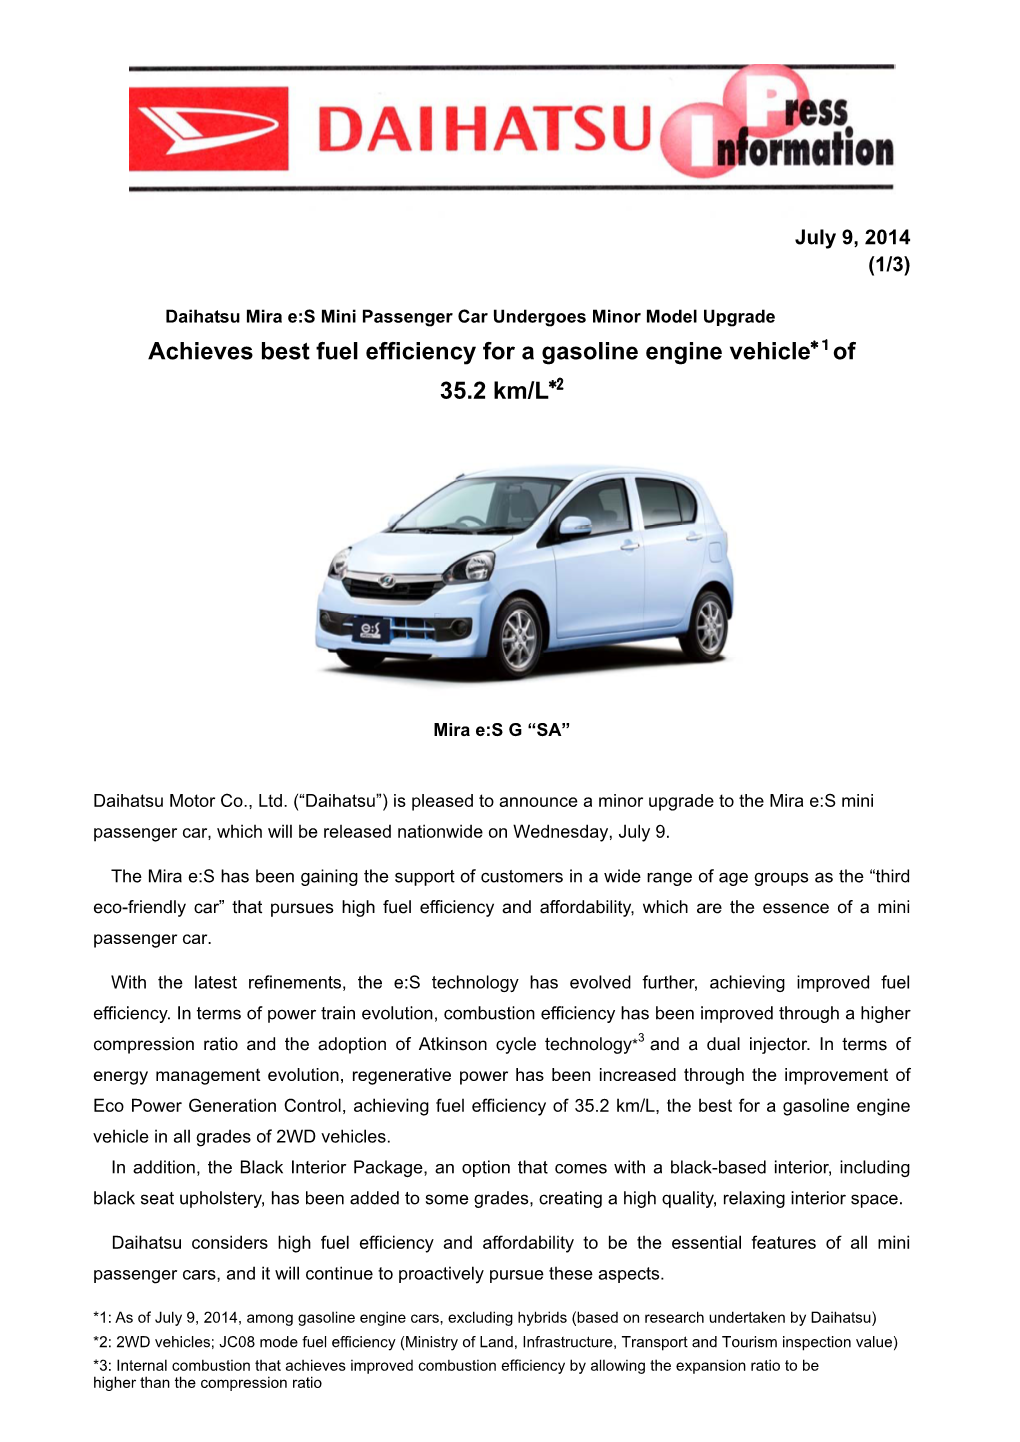 Daihatsu Mira E:S Mini Passenger Car Undergoes Minor Model Upgrade Achieves Best Fuel Efficiency for a Gasoline Engine Vehicle*１Of 35.2 Km/L*2